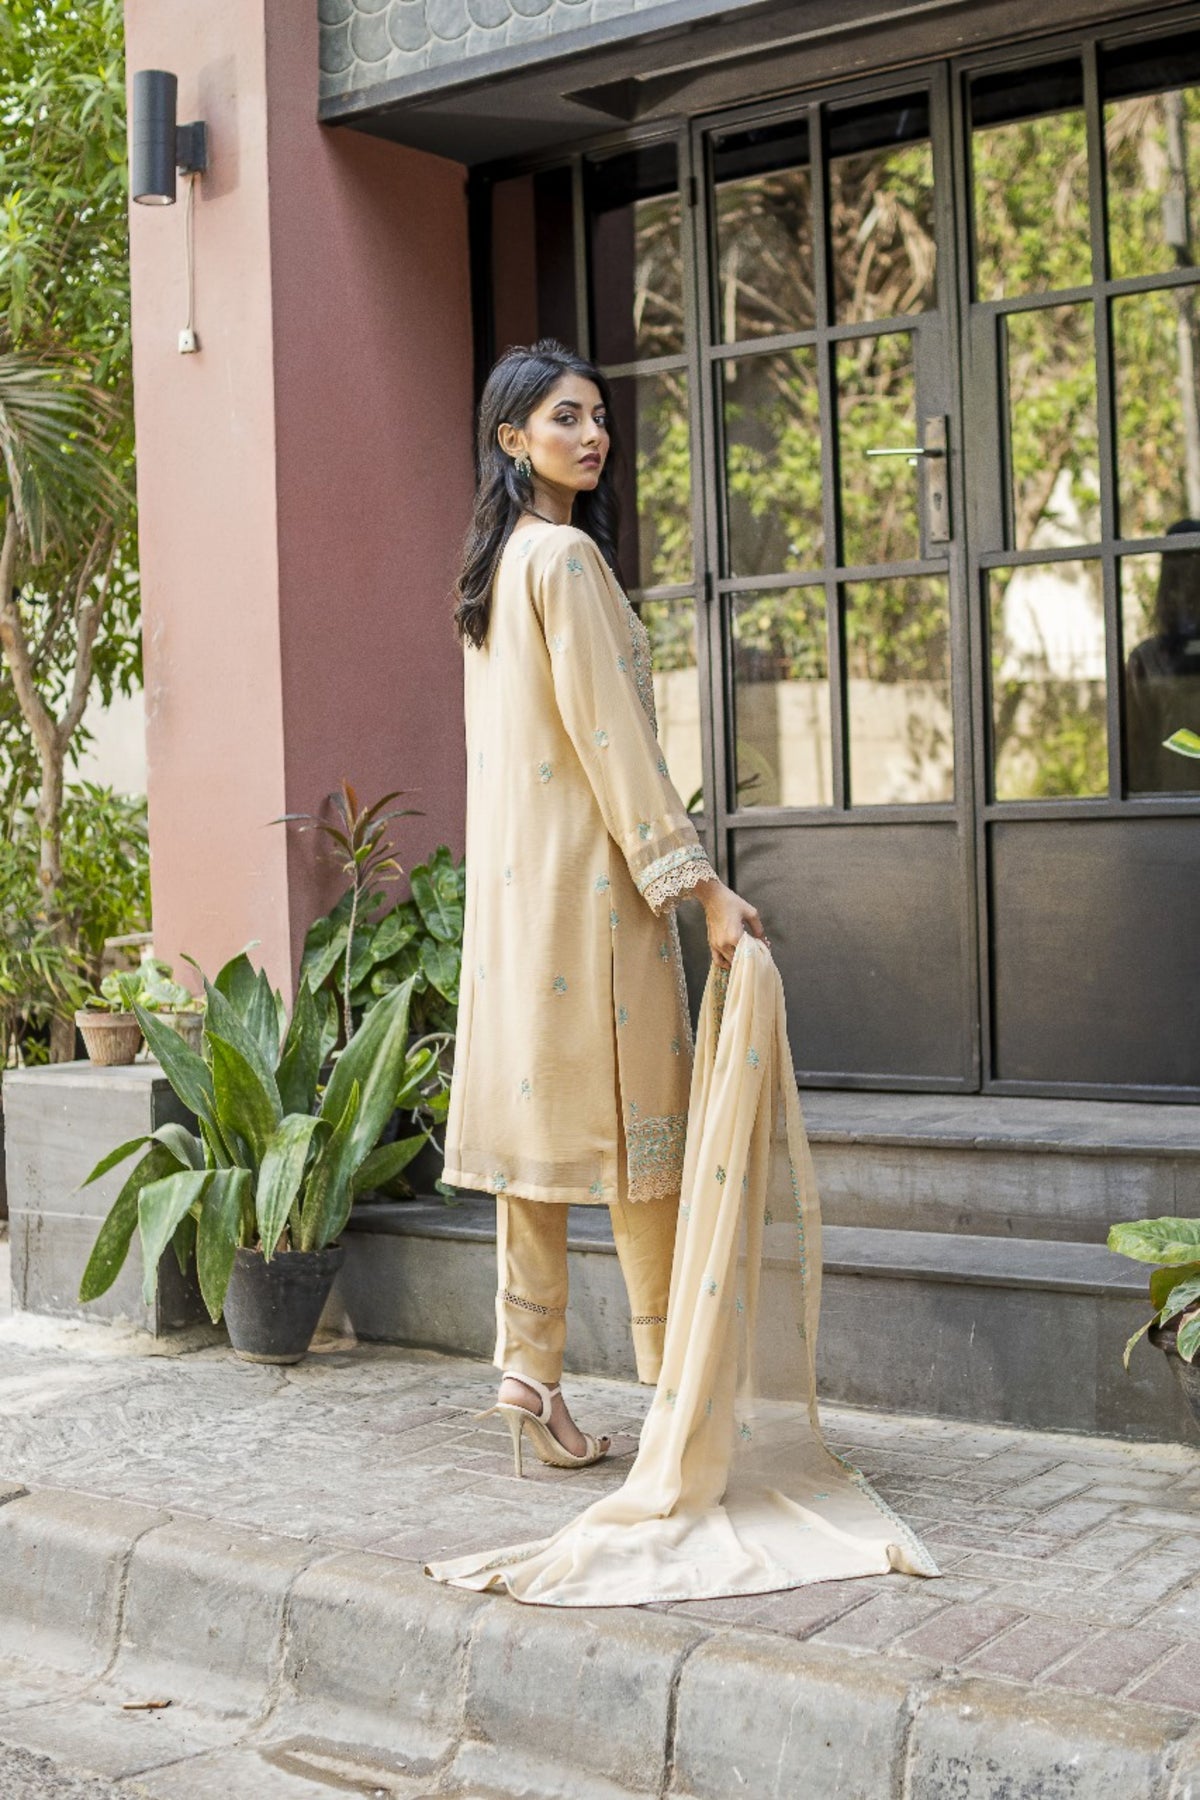 Queen Libas Light Glaze - Chiffon Ready Made Suit -Readymade Pakistani Suits UK